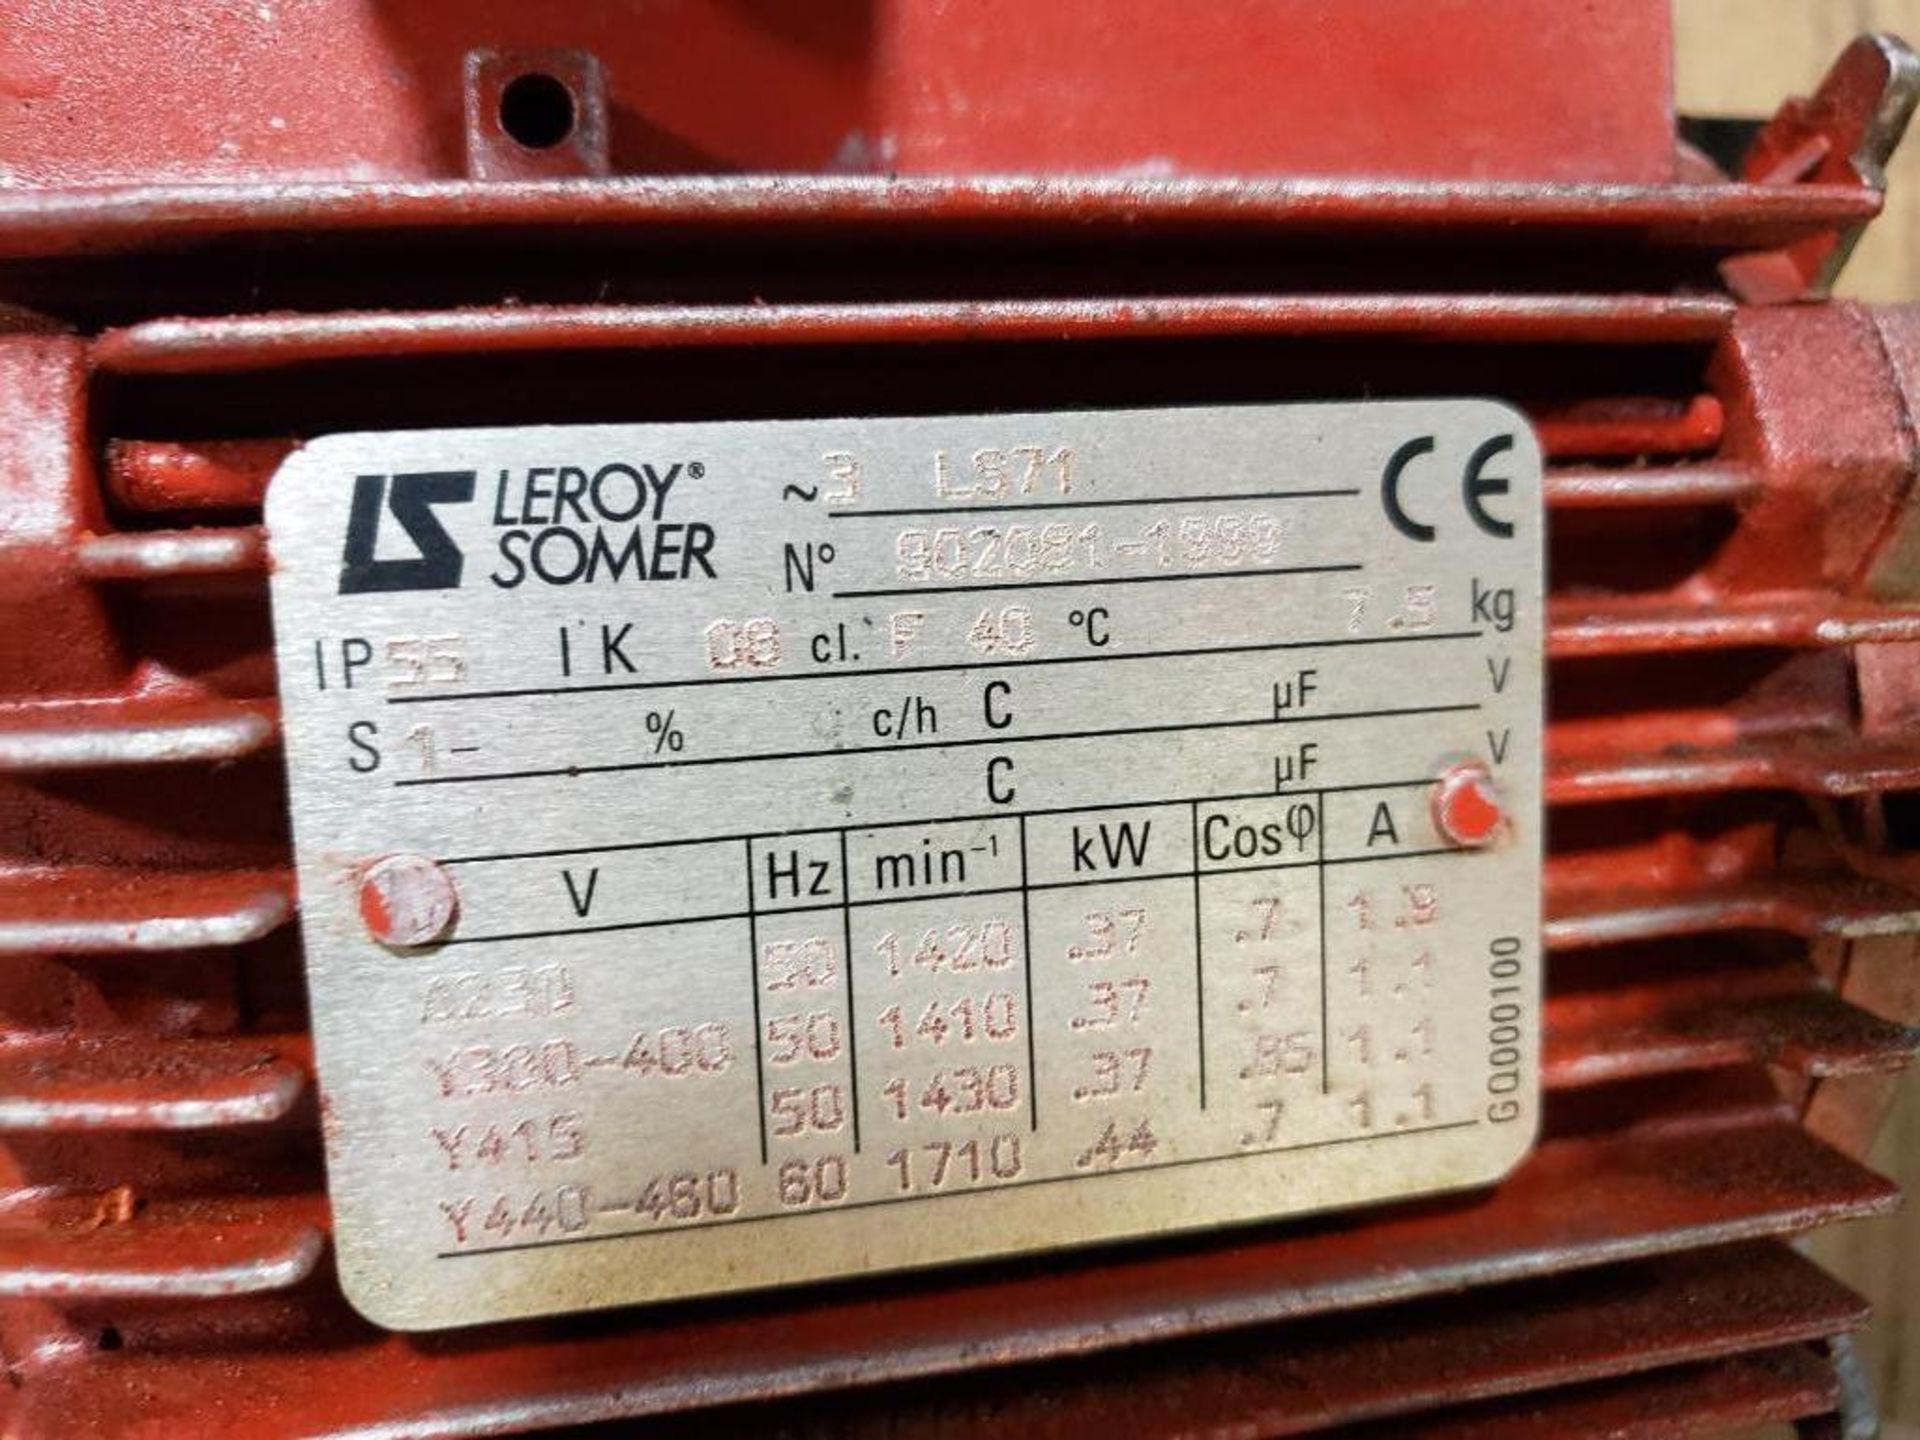 .44 kW Leroy Somer 902081-1990 pump. 3PH, 230/460V. - Image 3 of 4